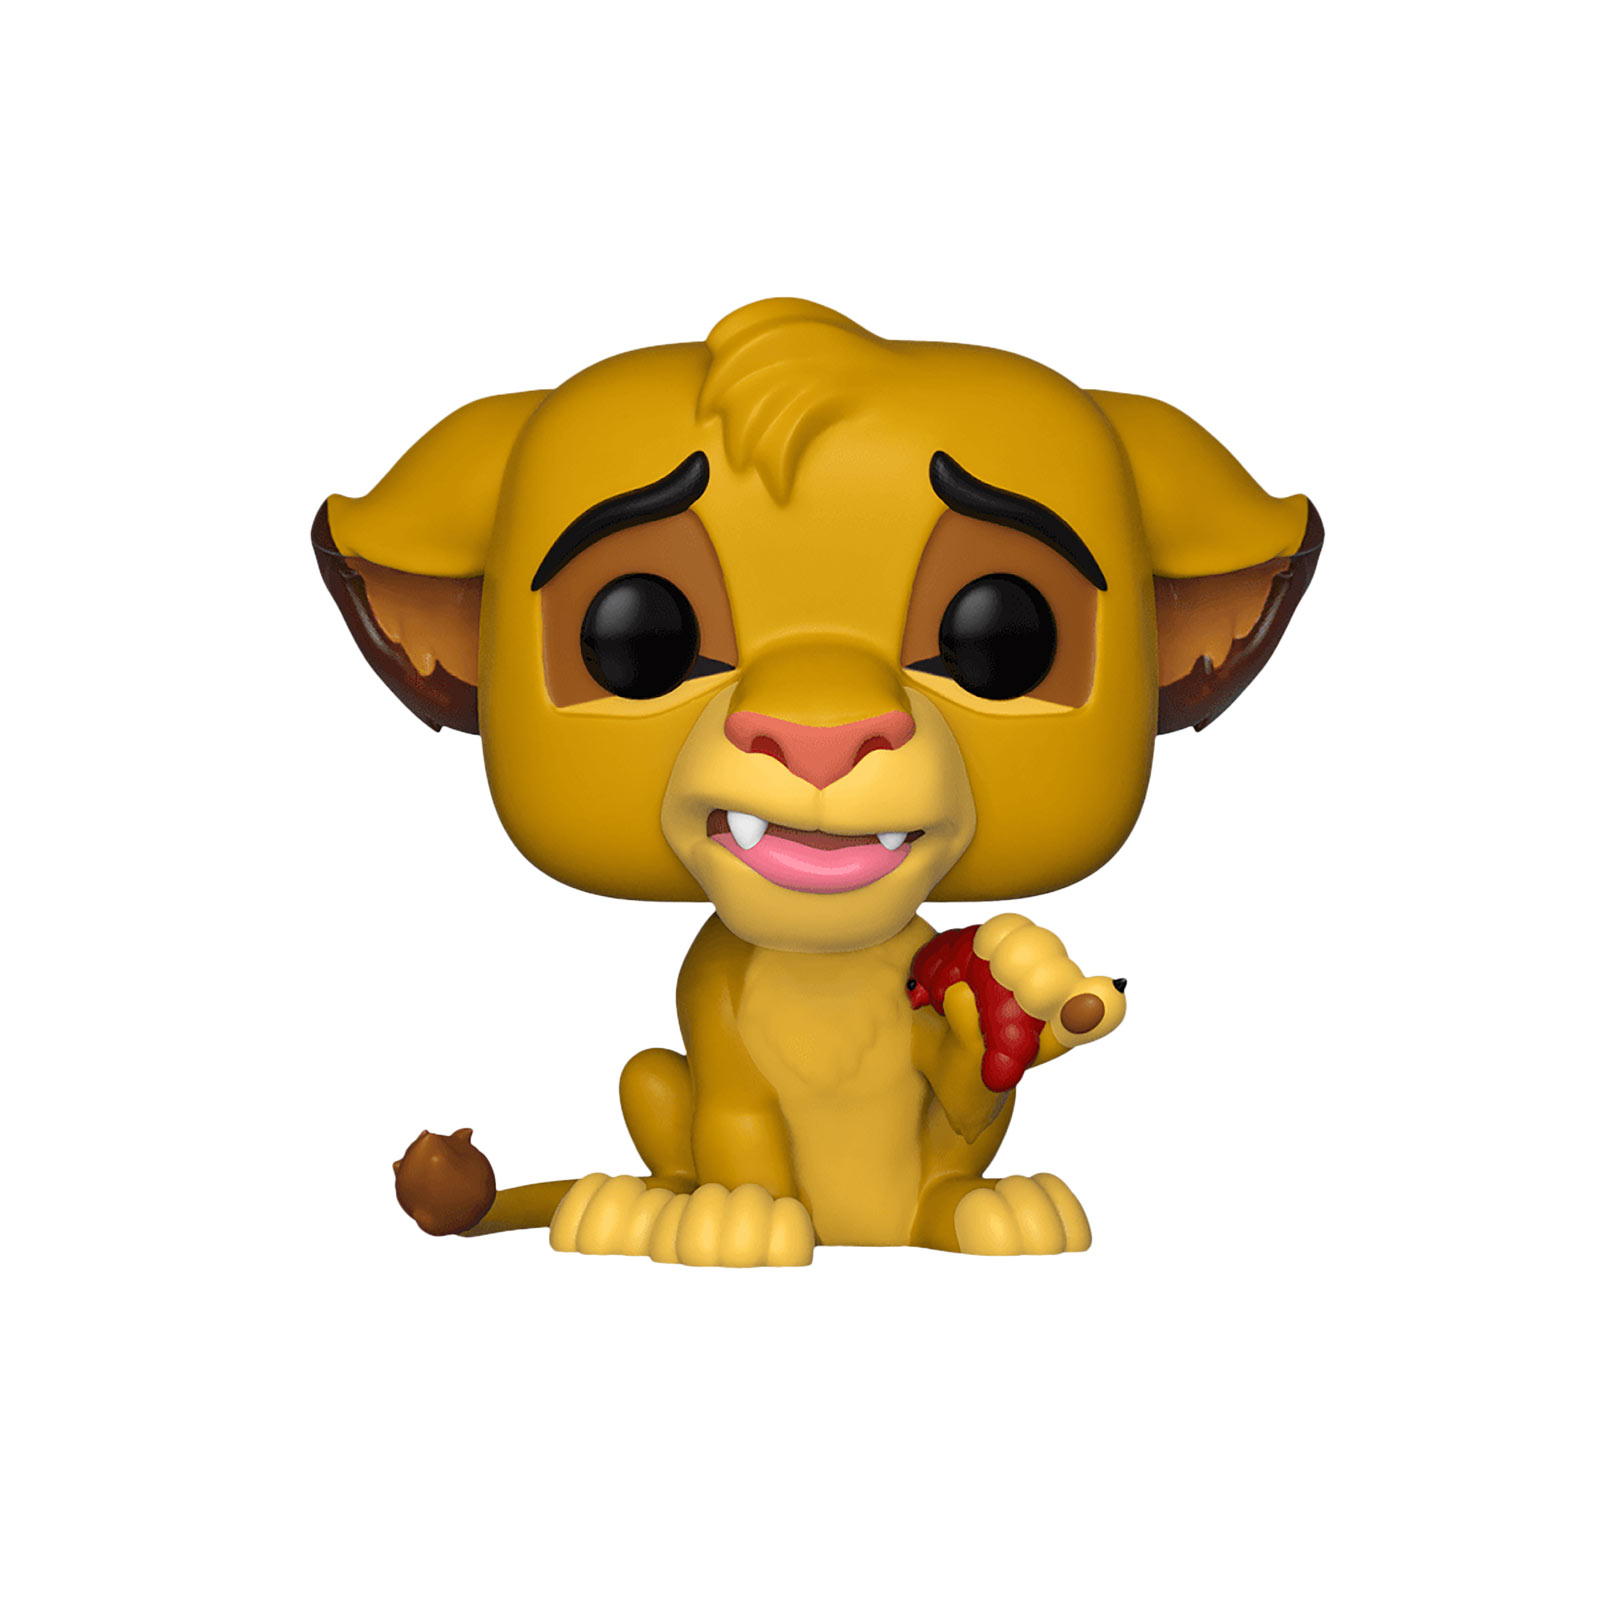 Le roi des lions - Simba Figurine Funko Pop